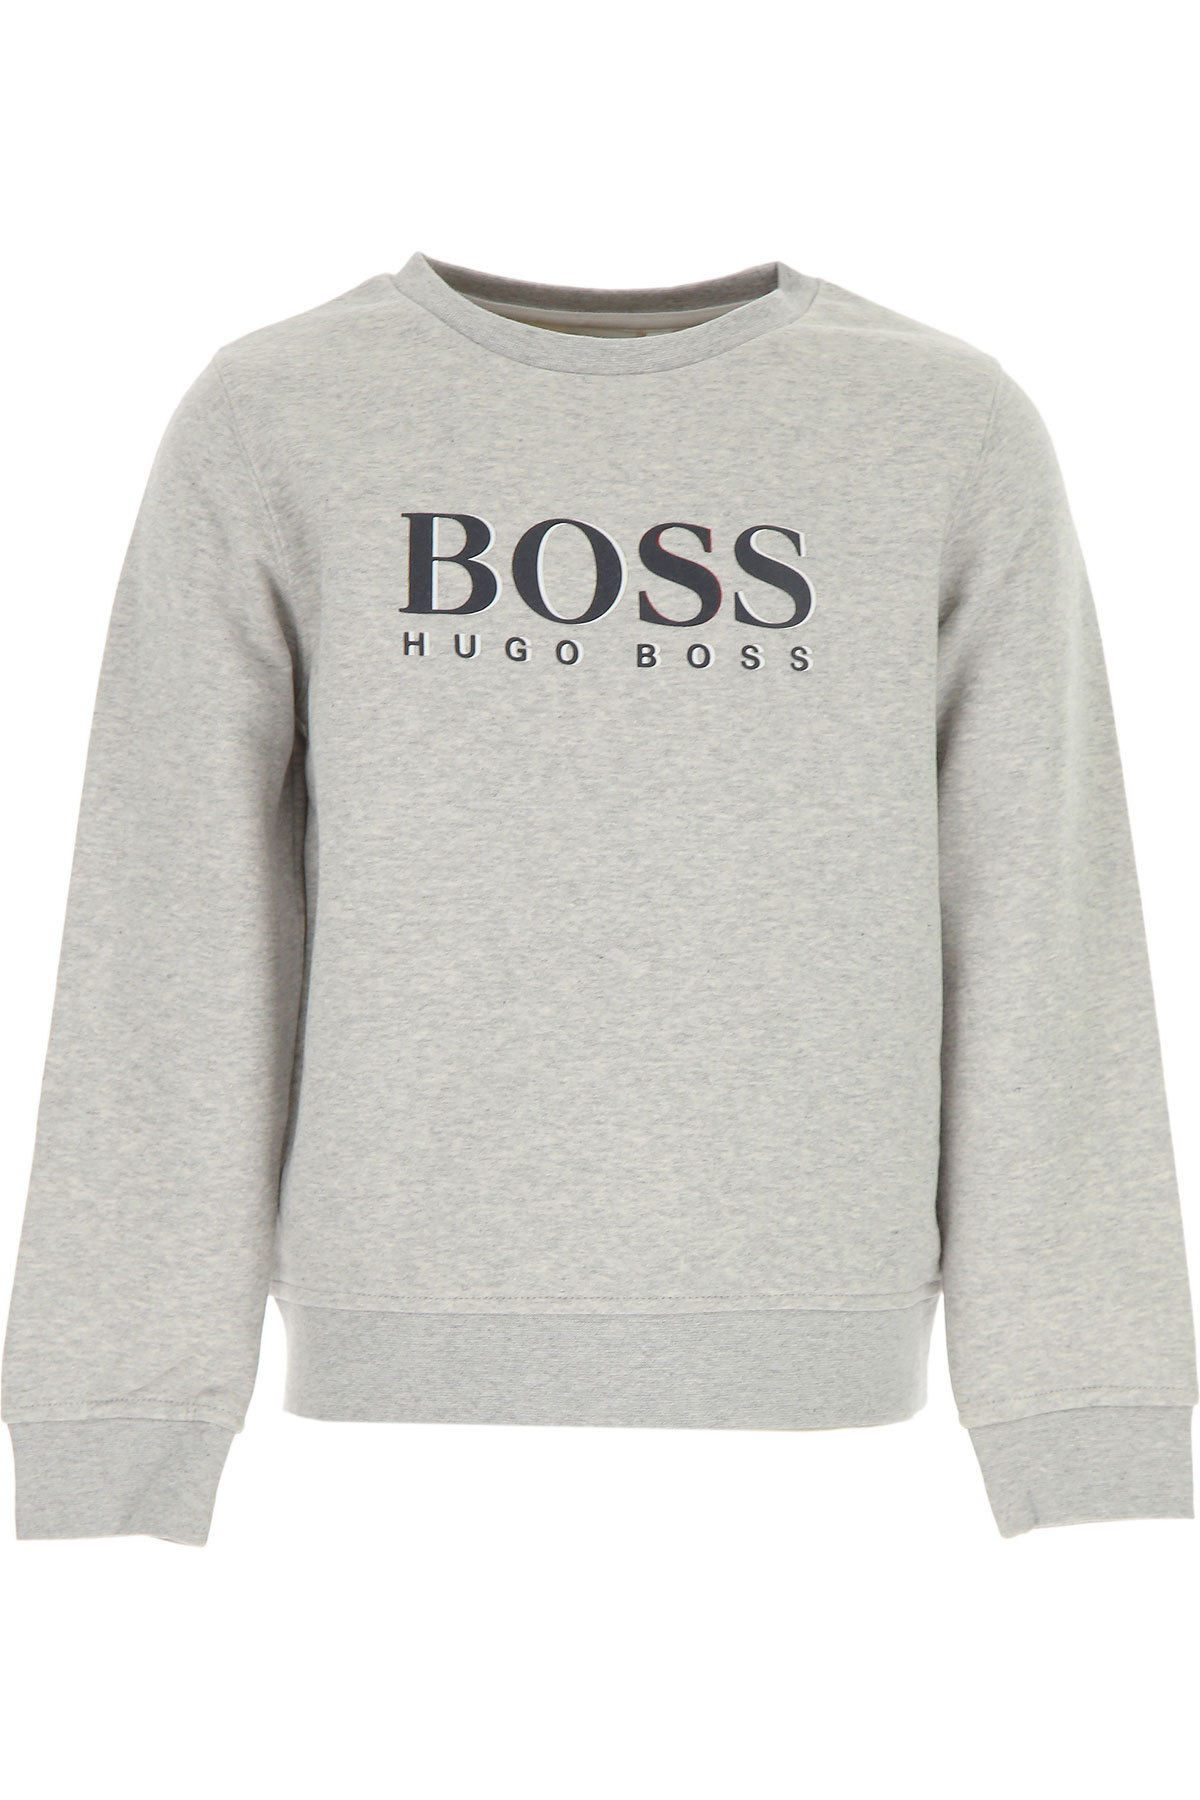 Hugo Boss Kinder Sweatshirt & Kapuzenpullover für Jungen Günstig im Sale, Grau, Baumwolle, 2017, 16Y 4Y 5Y 6Y